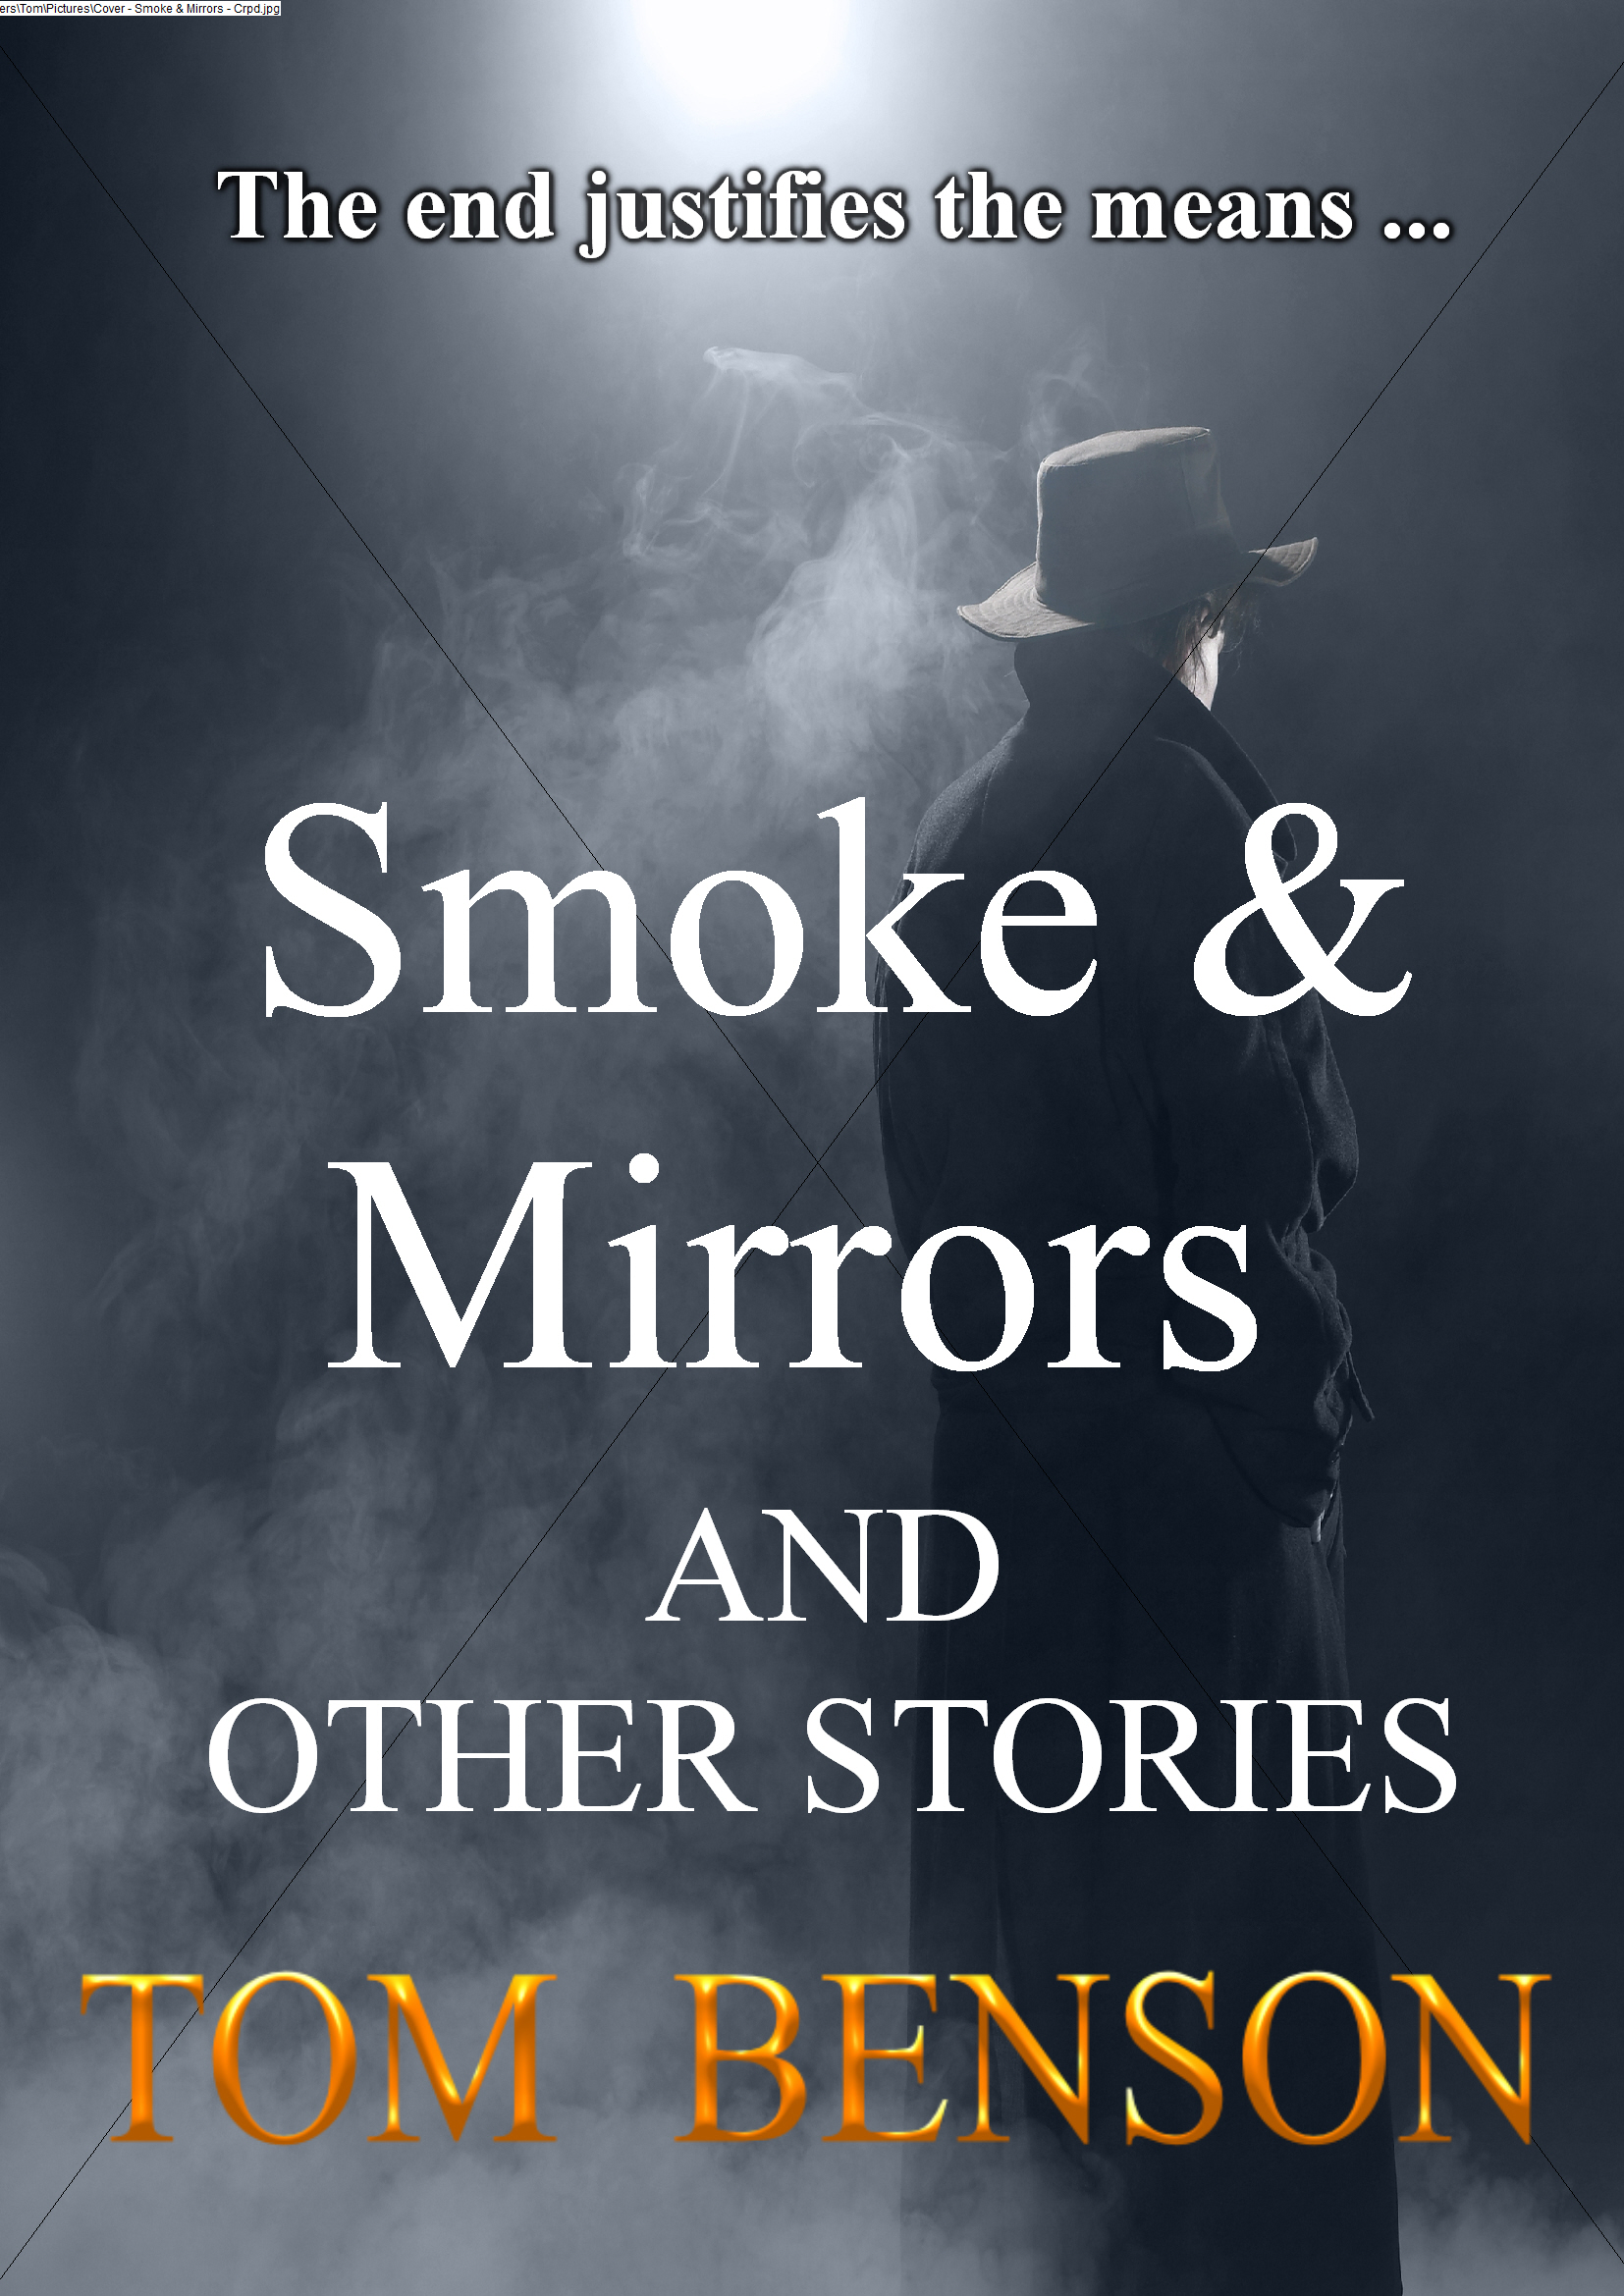 smoke-mirrors-020614